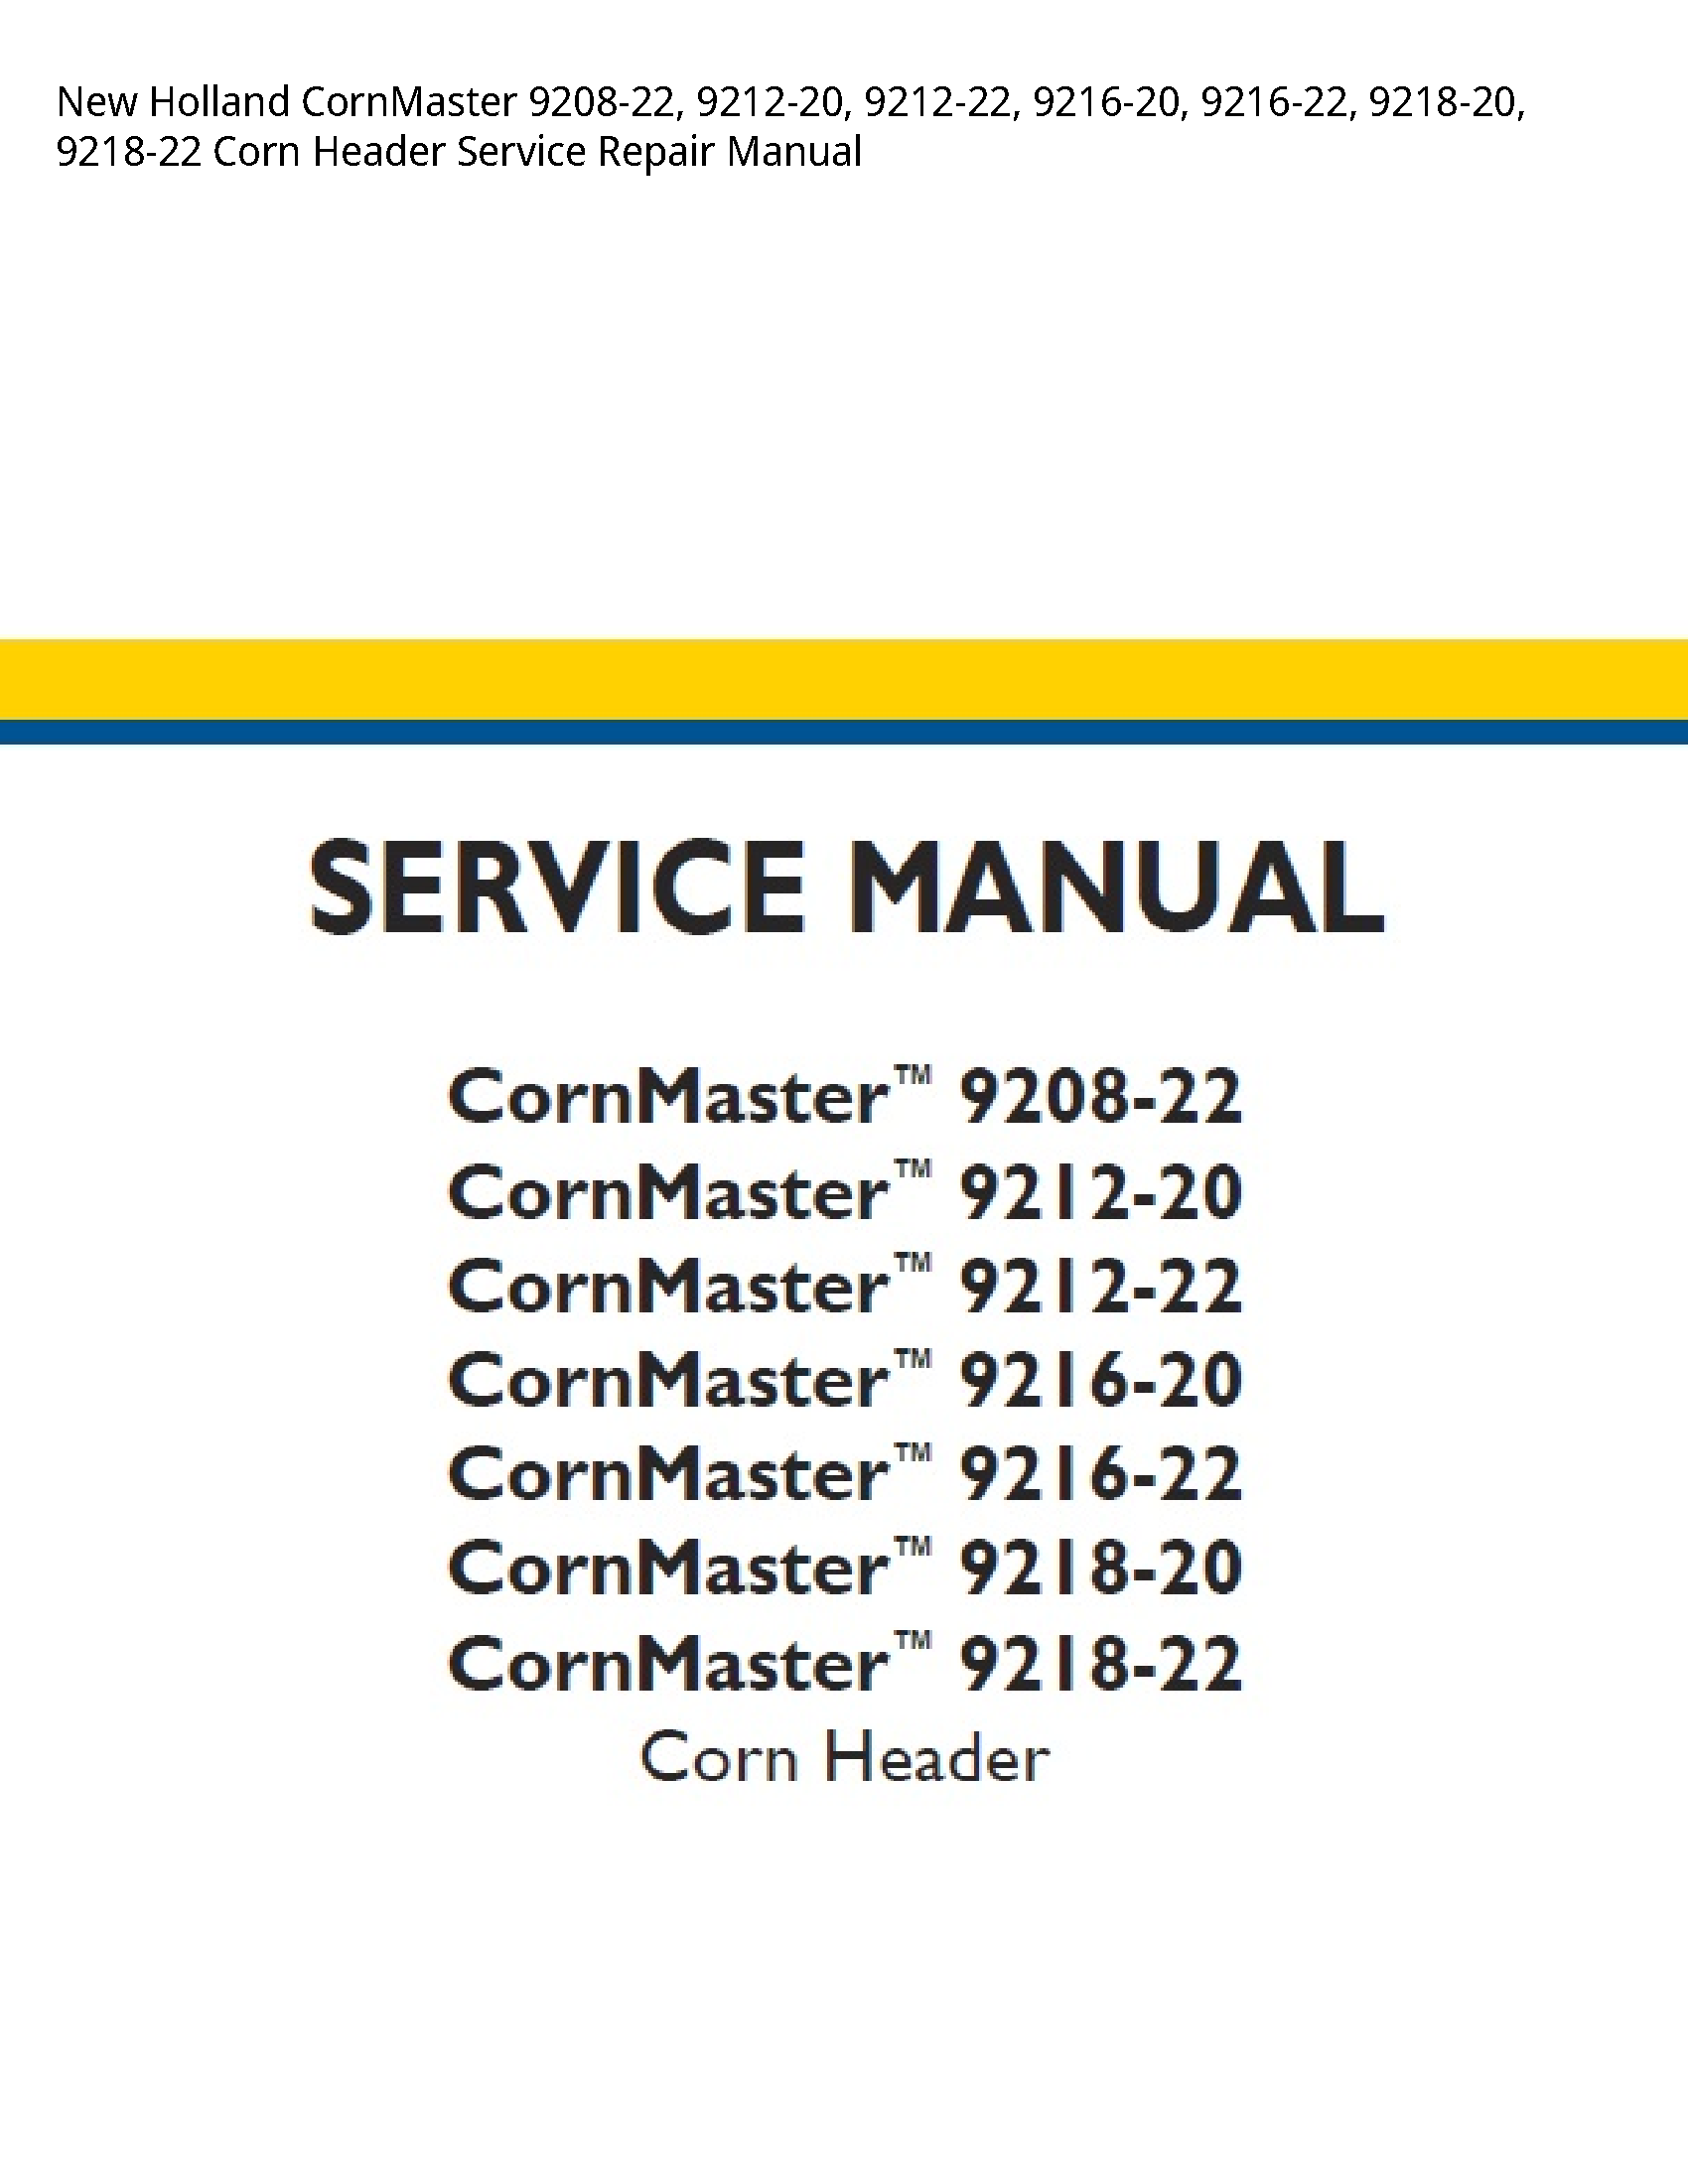 New Holland 9208-22 CornMaster Corn Header manual